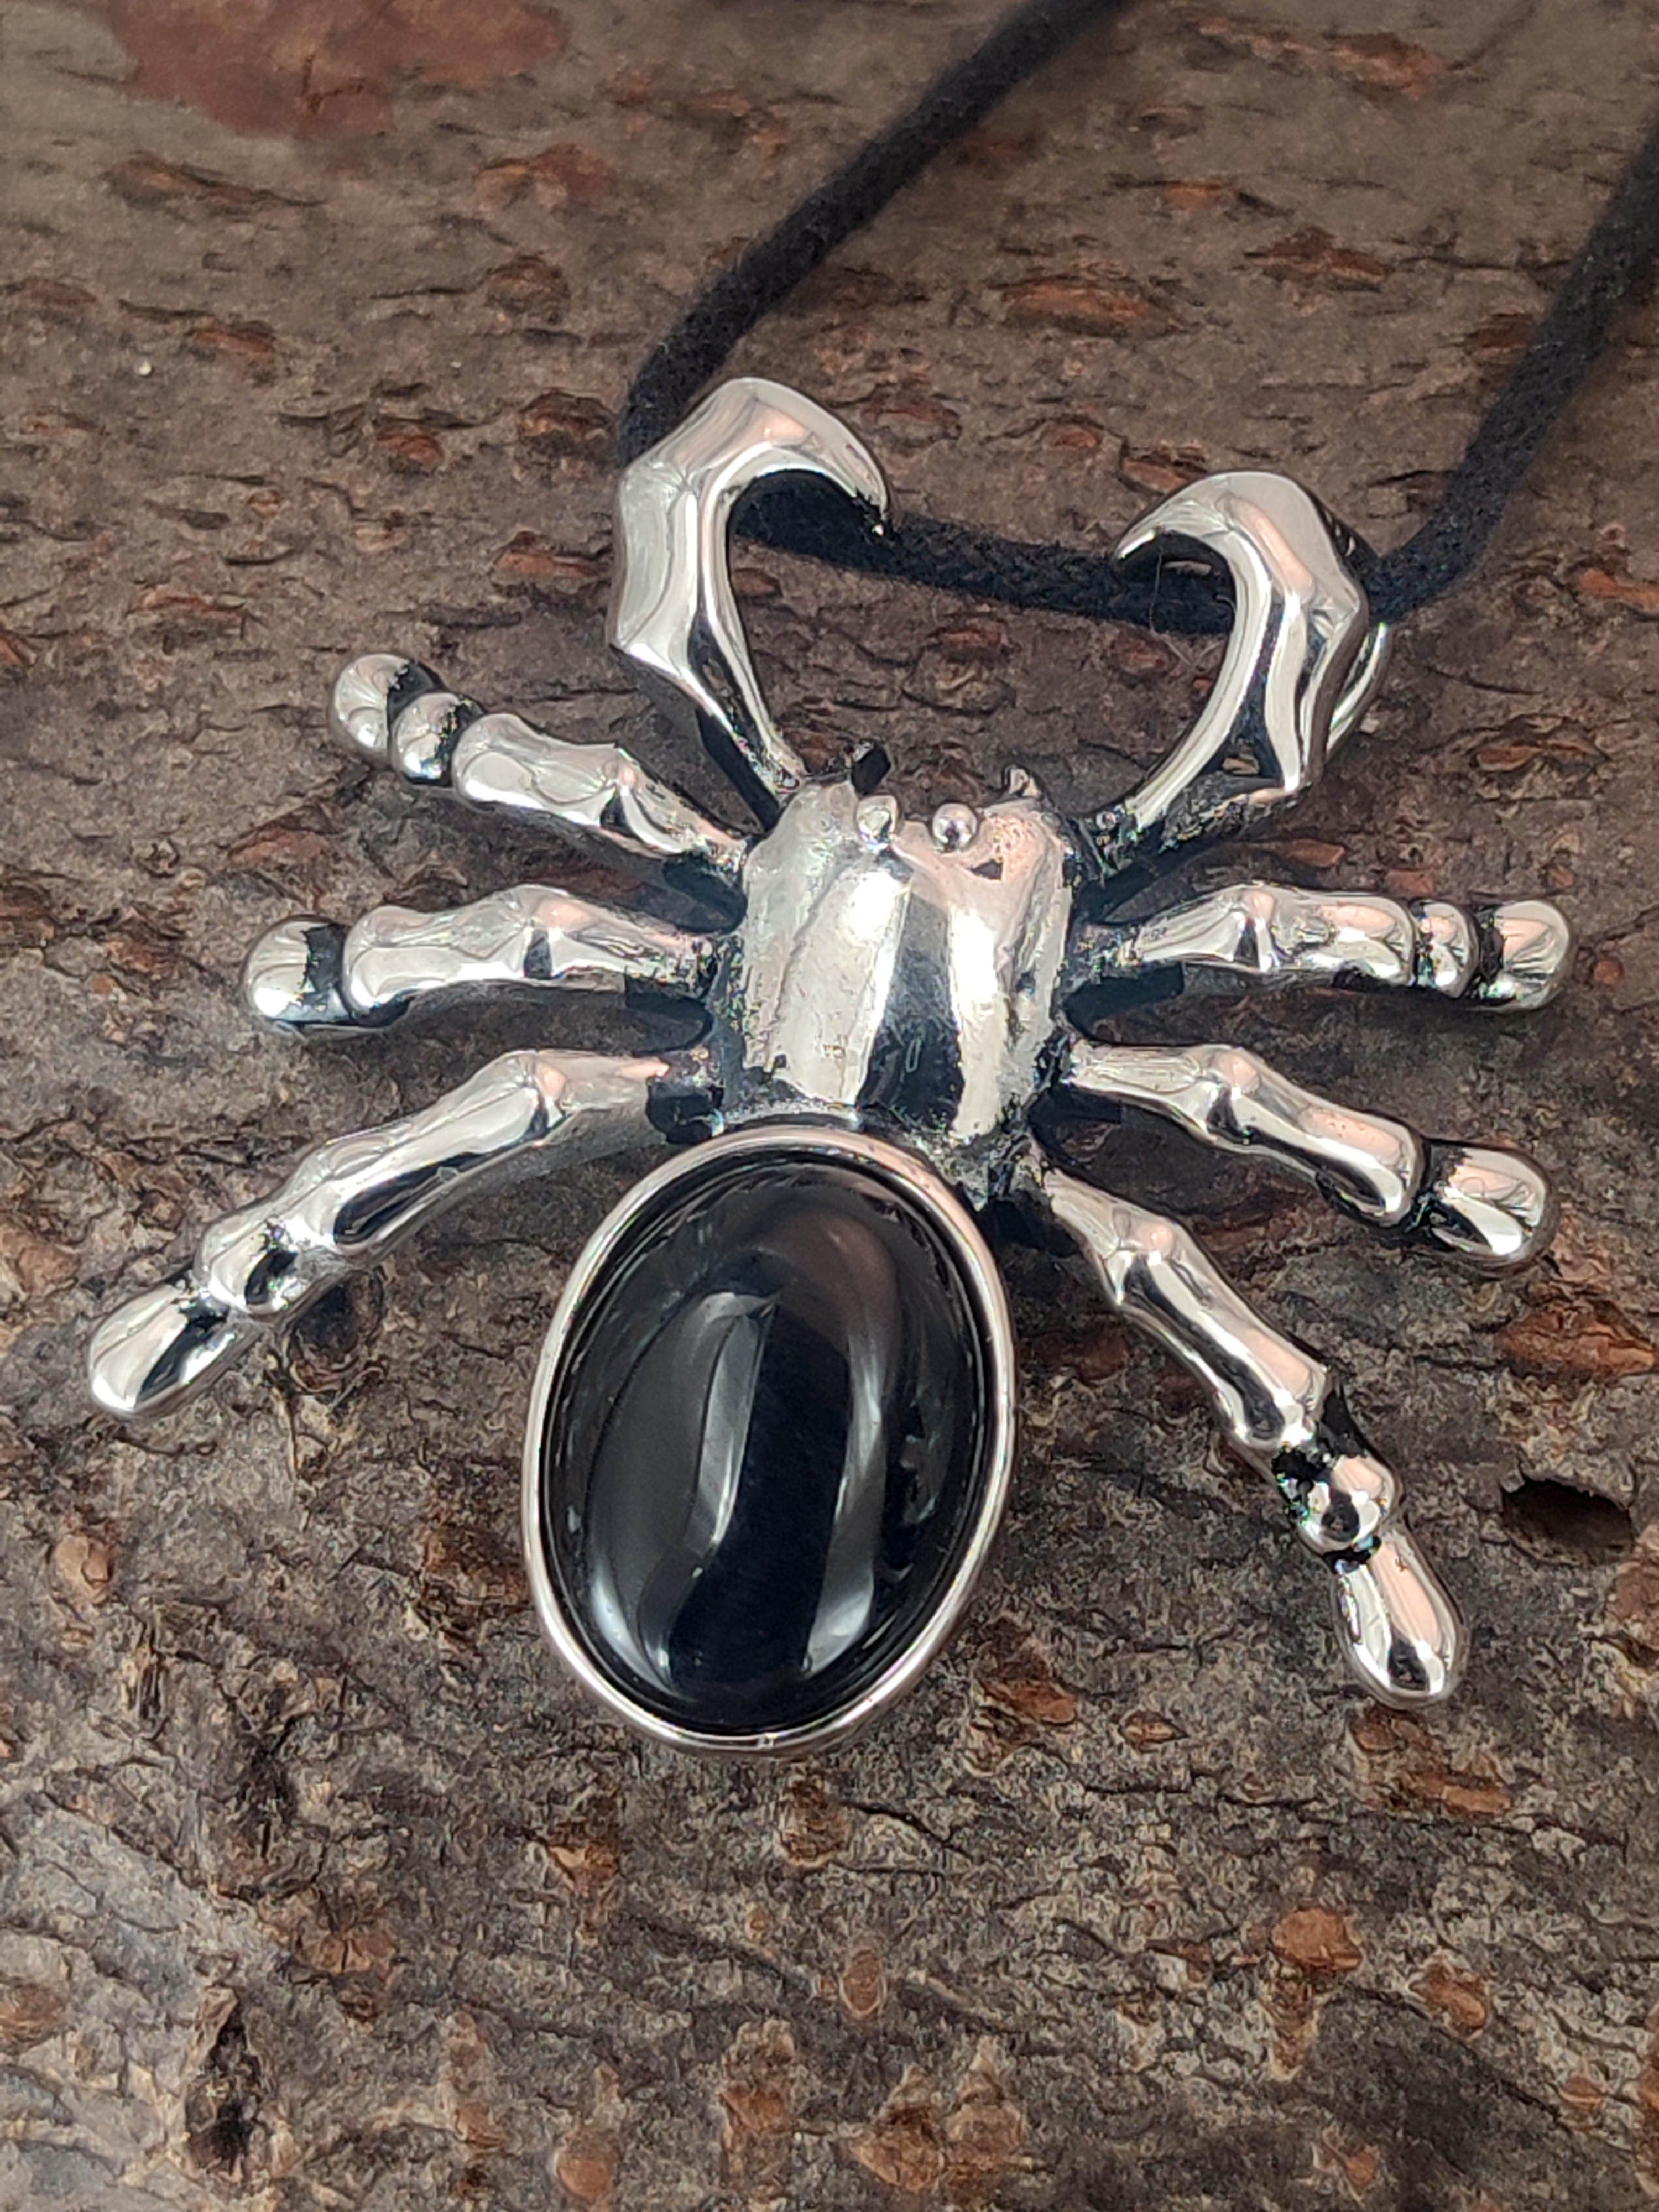 Spinne Spider aus of Kiss Anhänger Spinnen Leather Kettenanhänger massiver Edelstahl großer